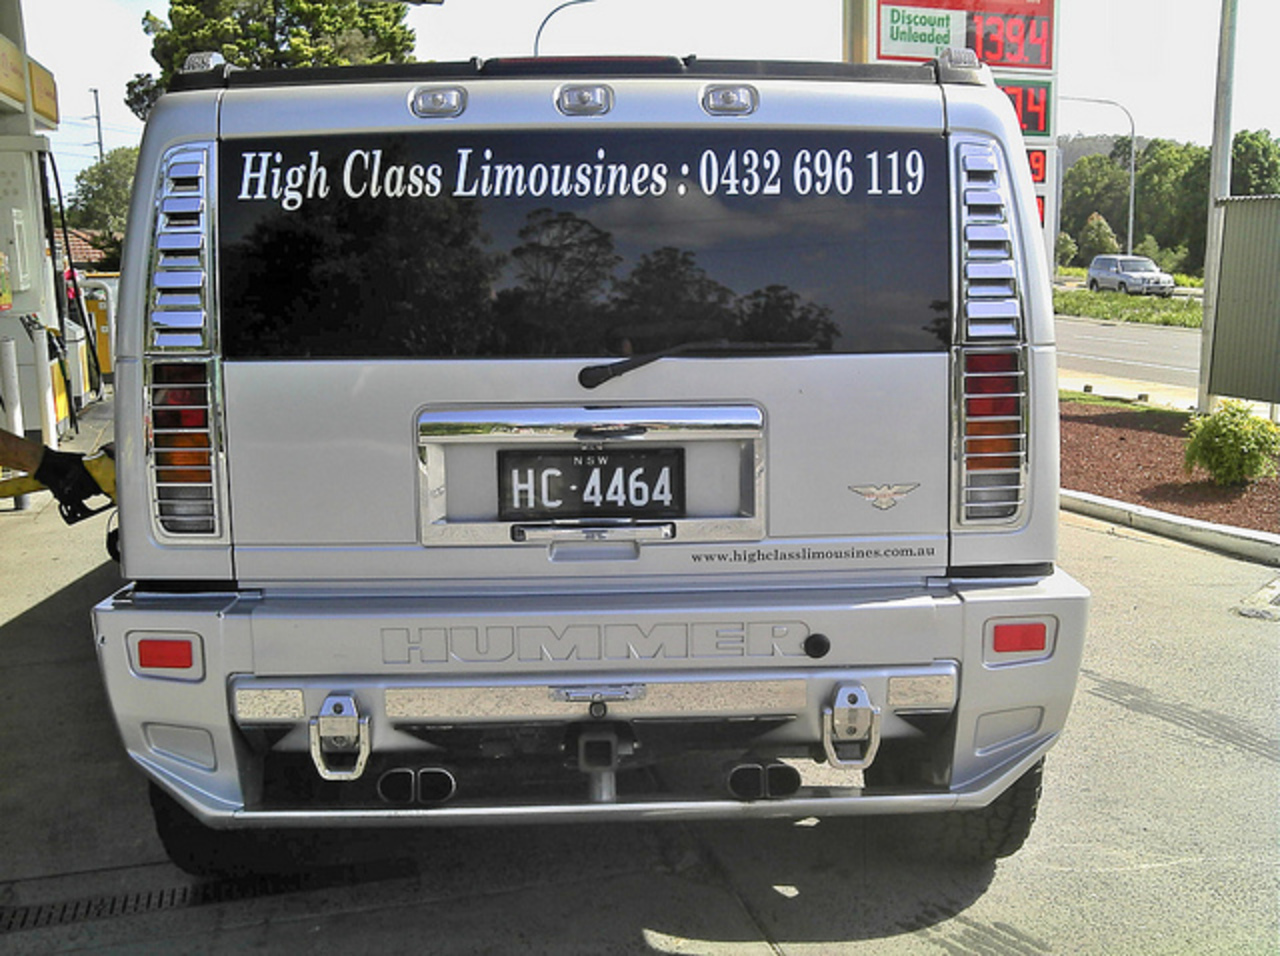 2010 Hummer H3 Limousine | Flickr - Photo Sharing!